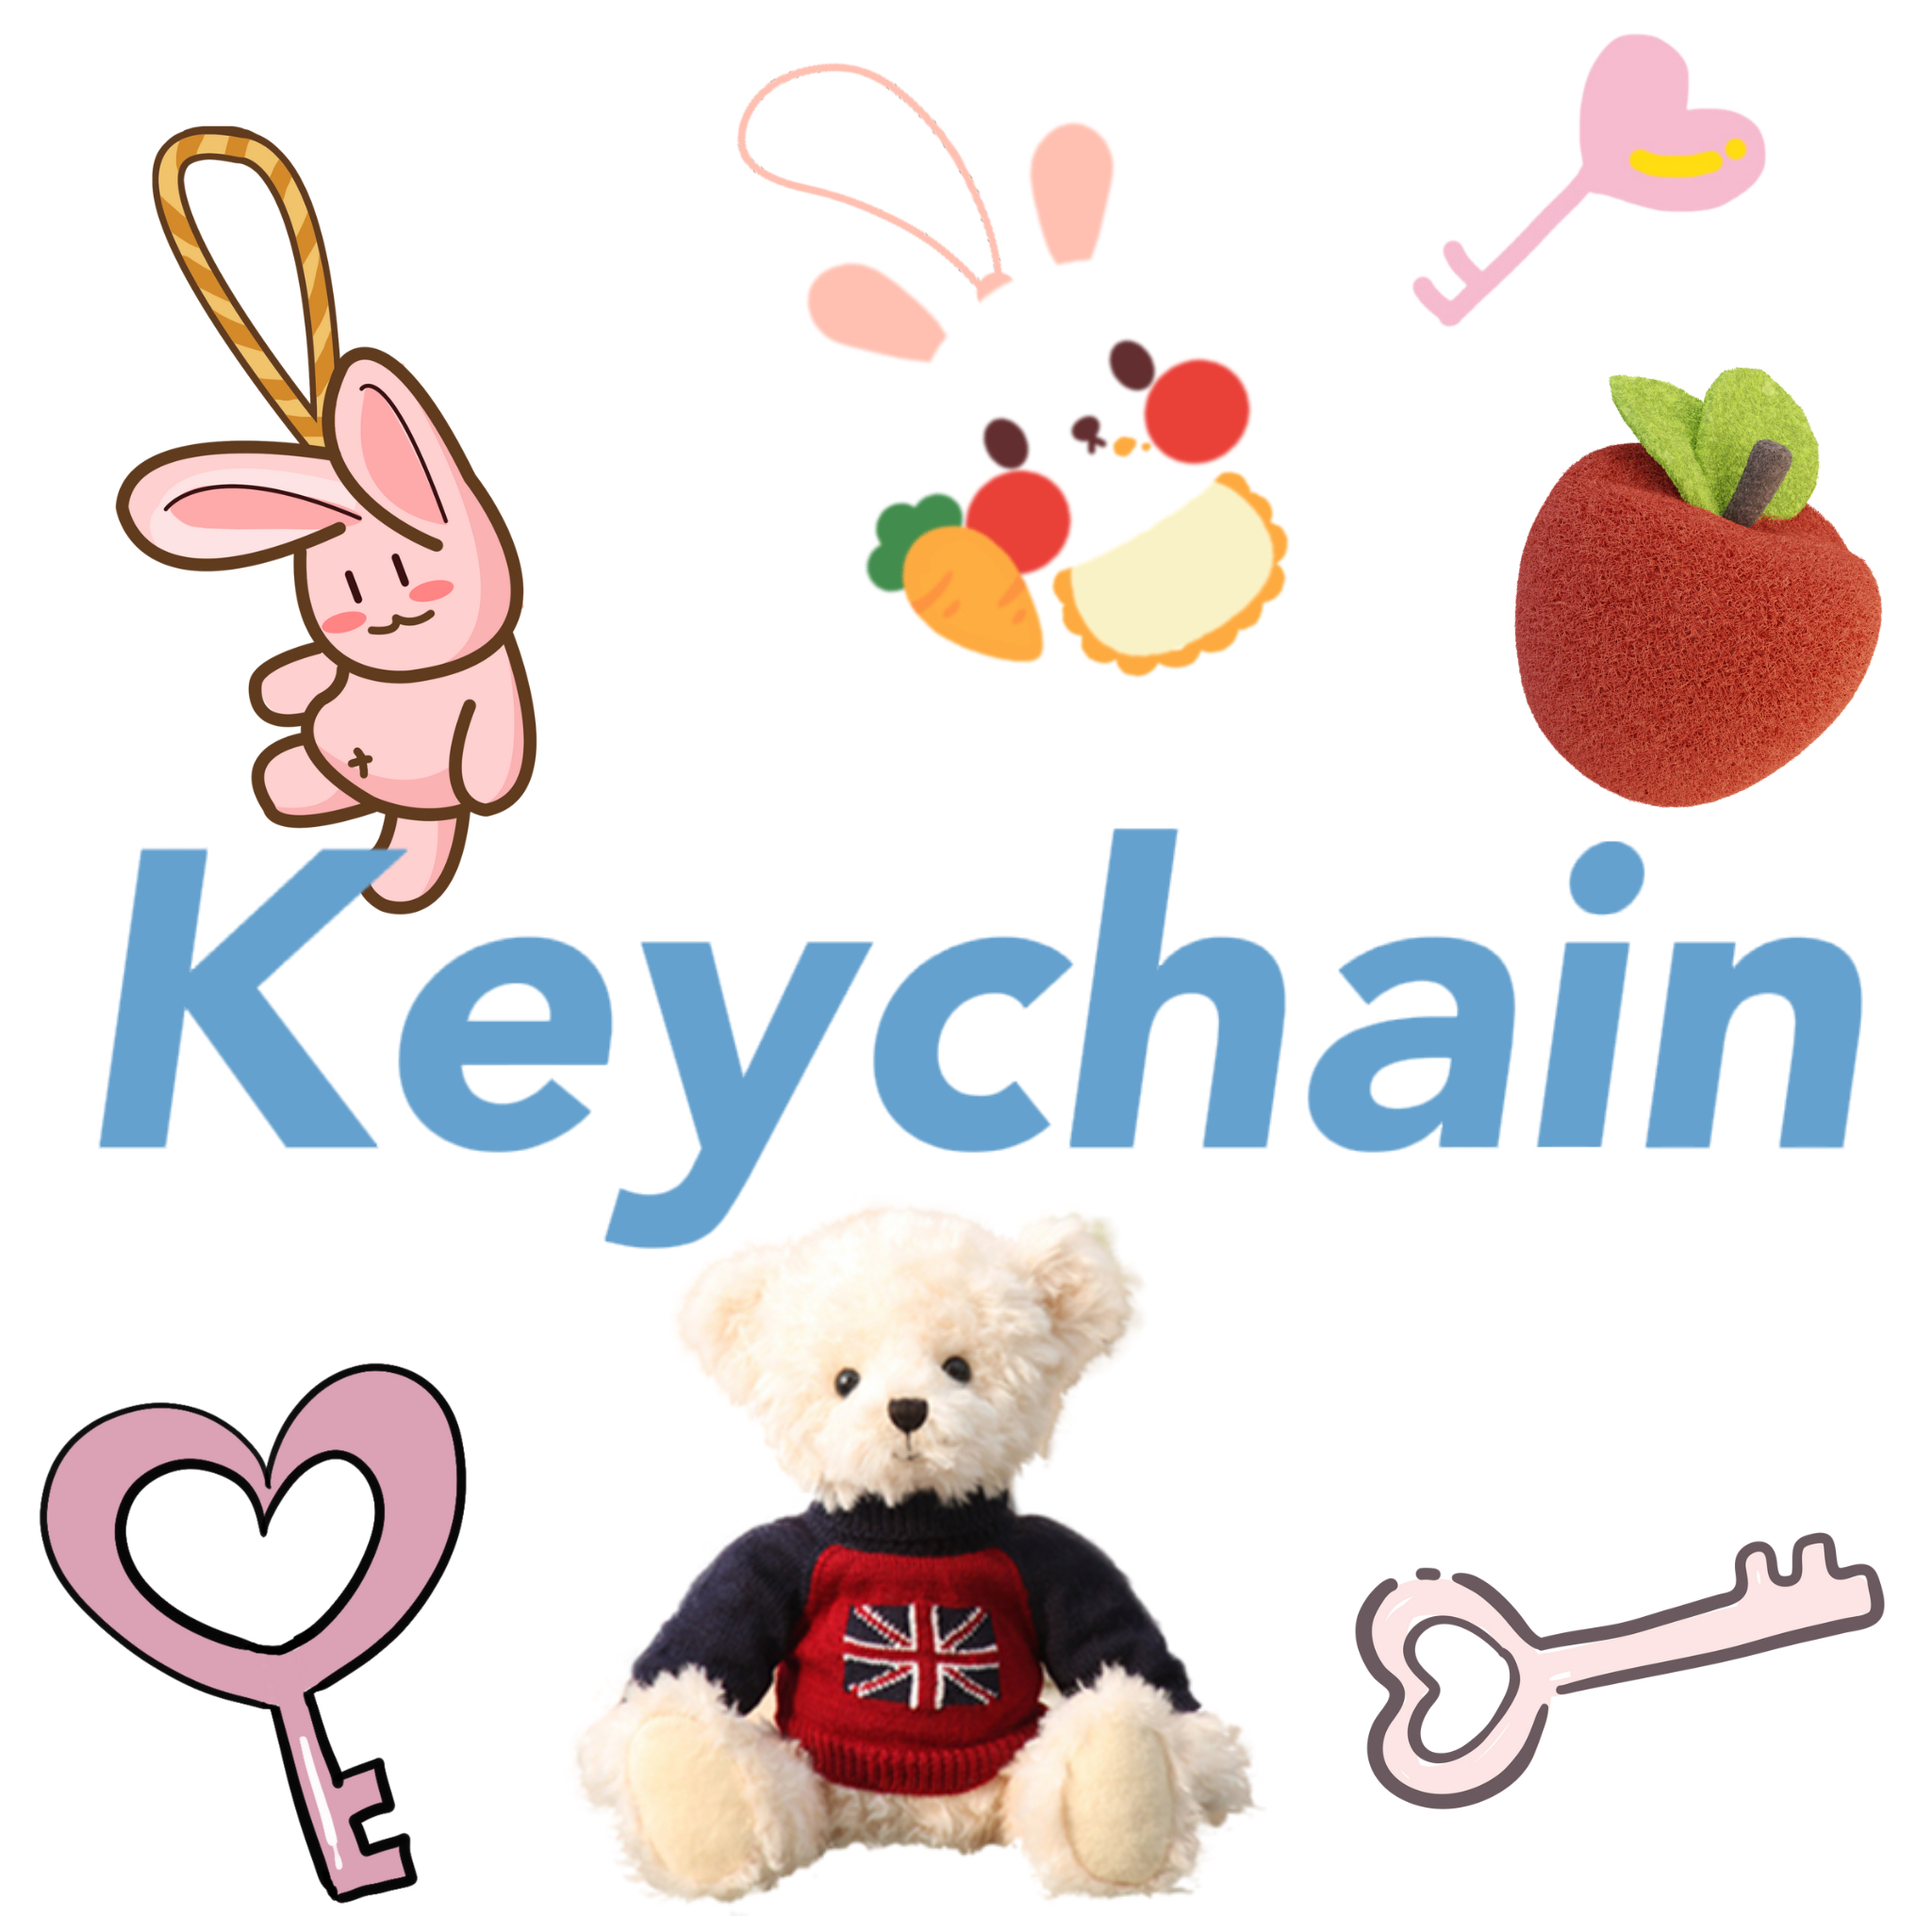 keychain